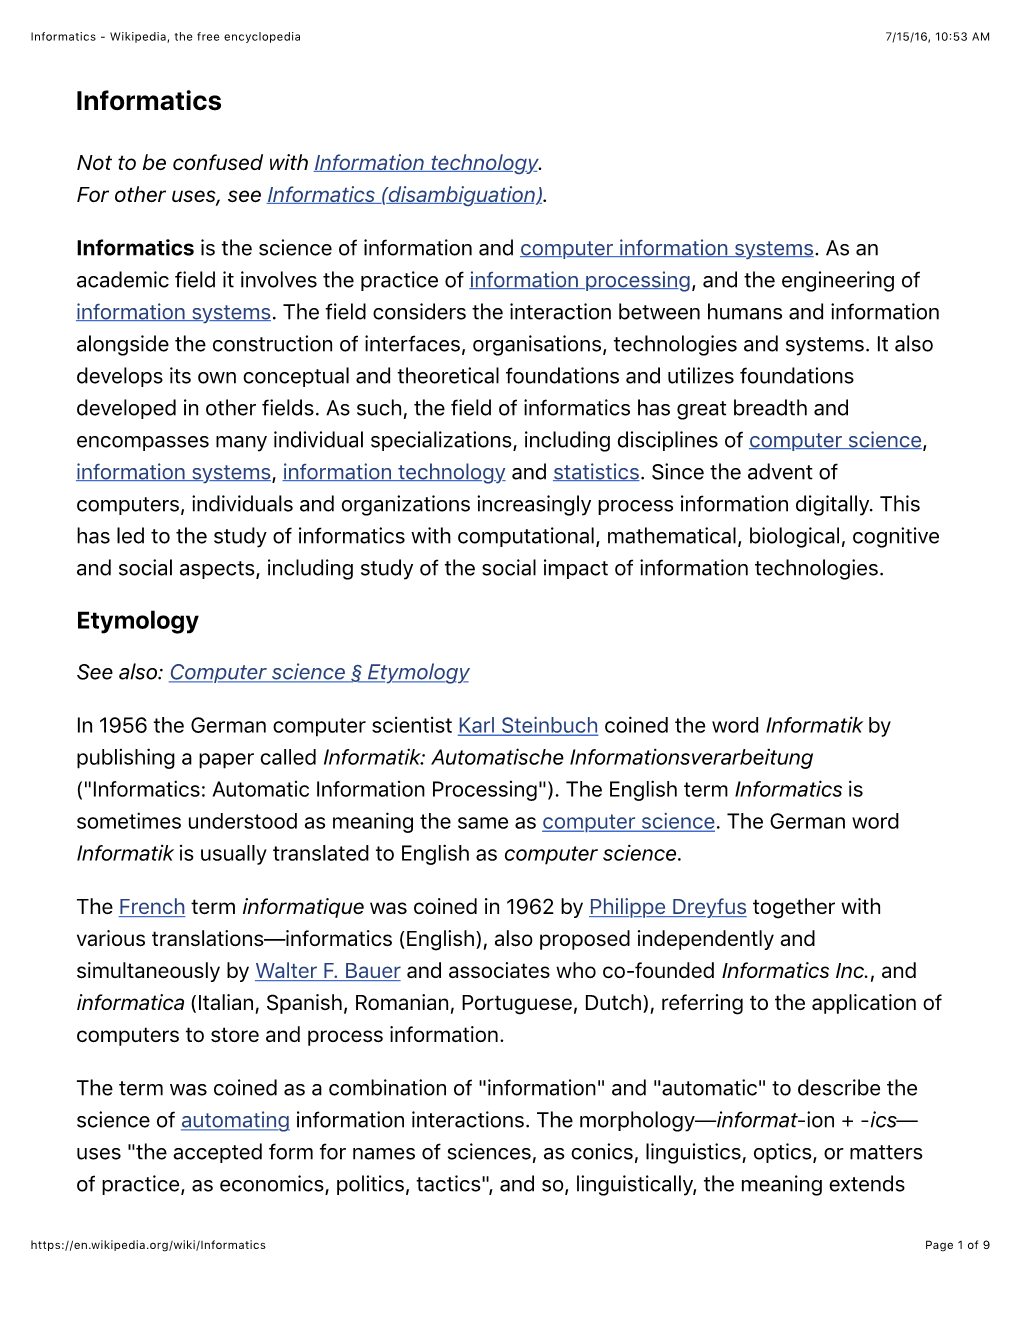 Informatics - Wikipedia, the Free Encyclopedia 7/15/16, 10:53 AM